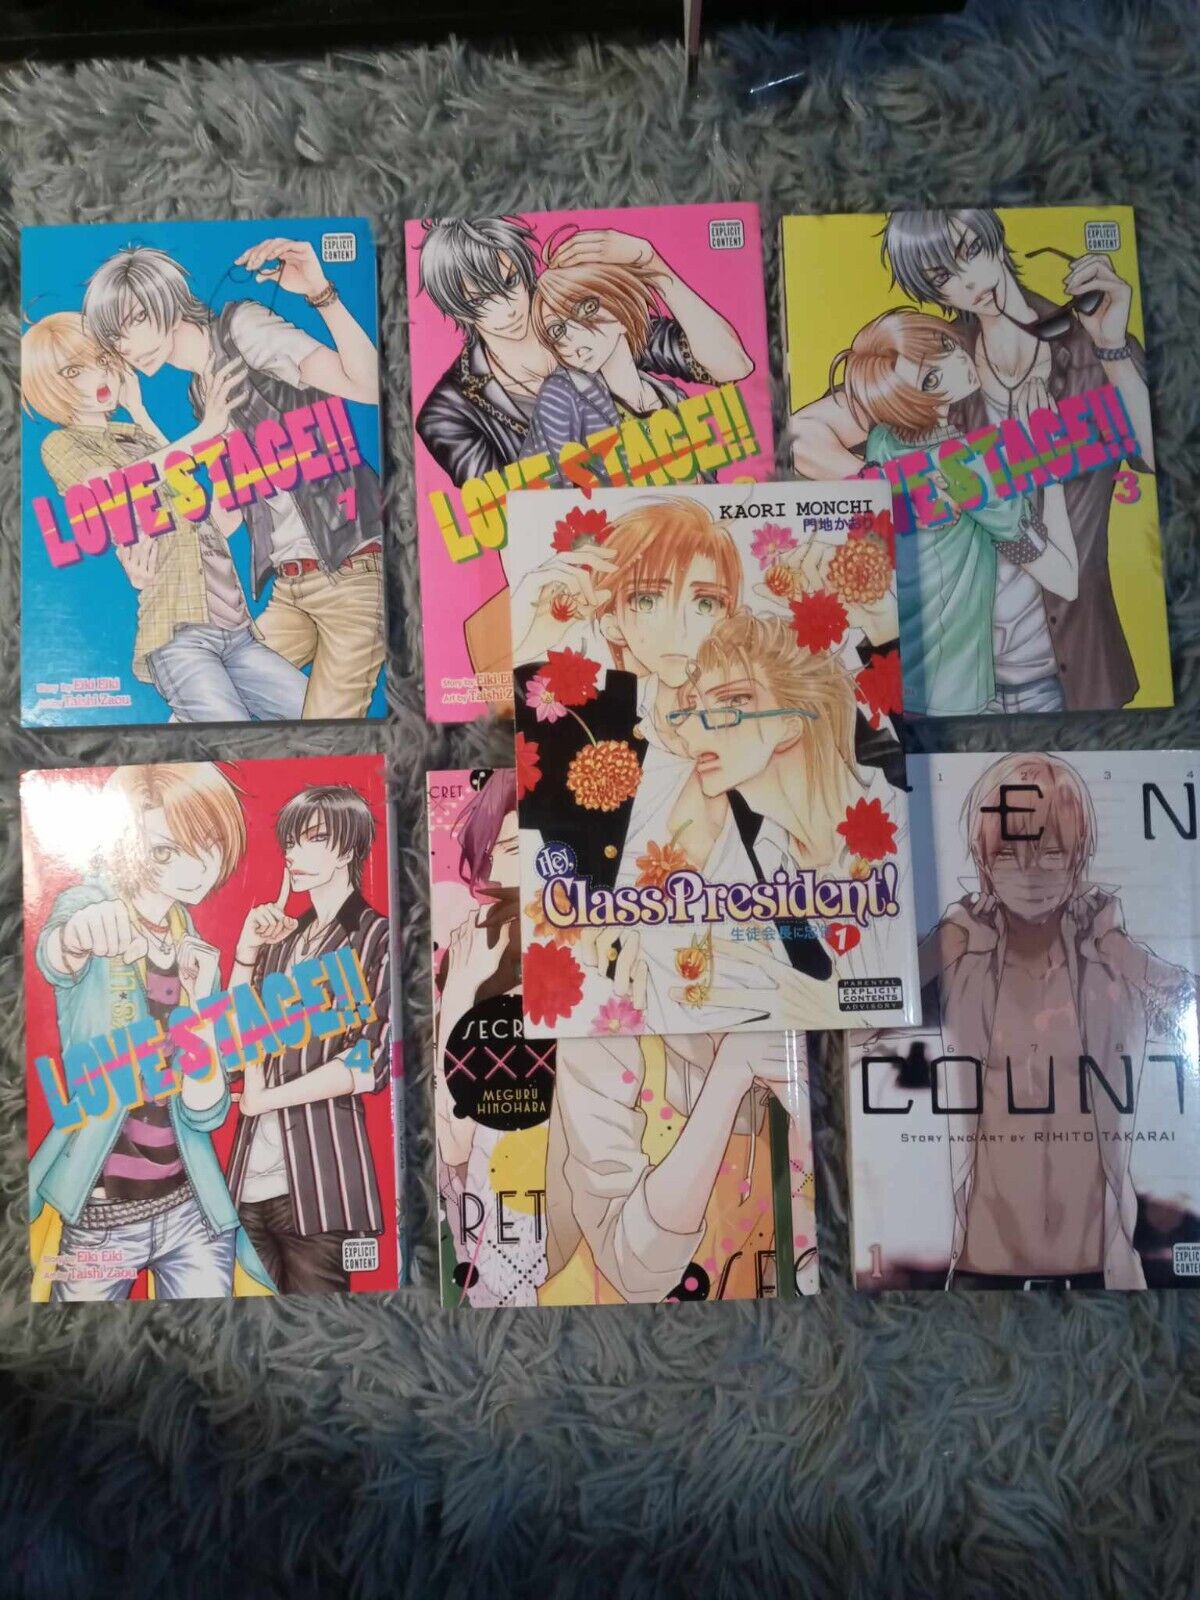 BL Yaoi Random Manga Lot 7 Volumes LOVE STAGE TEN COUNT SECRET CLASS PRESIDENT